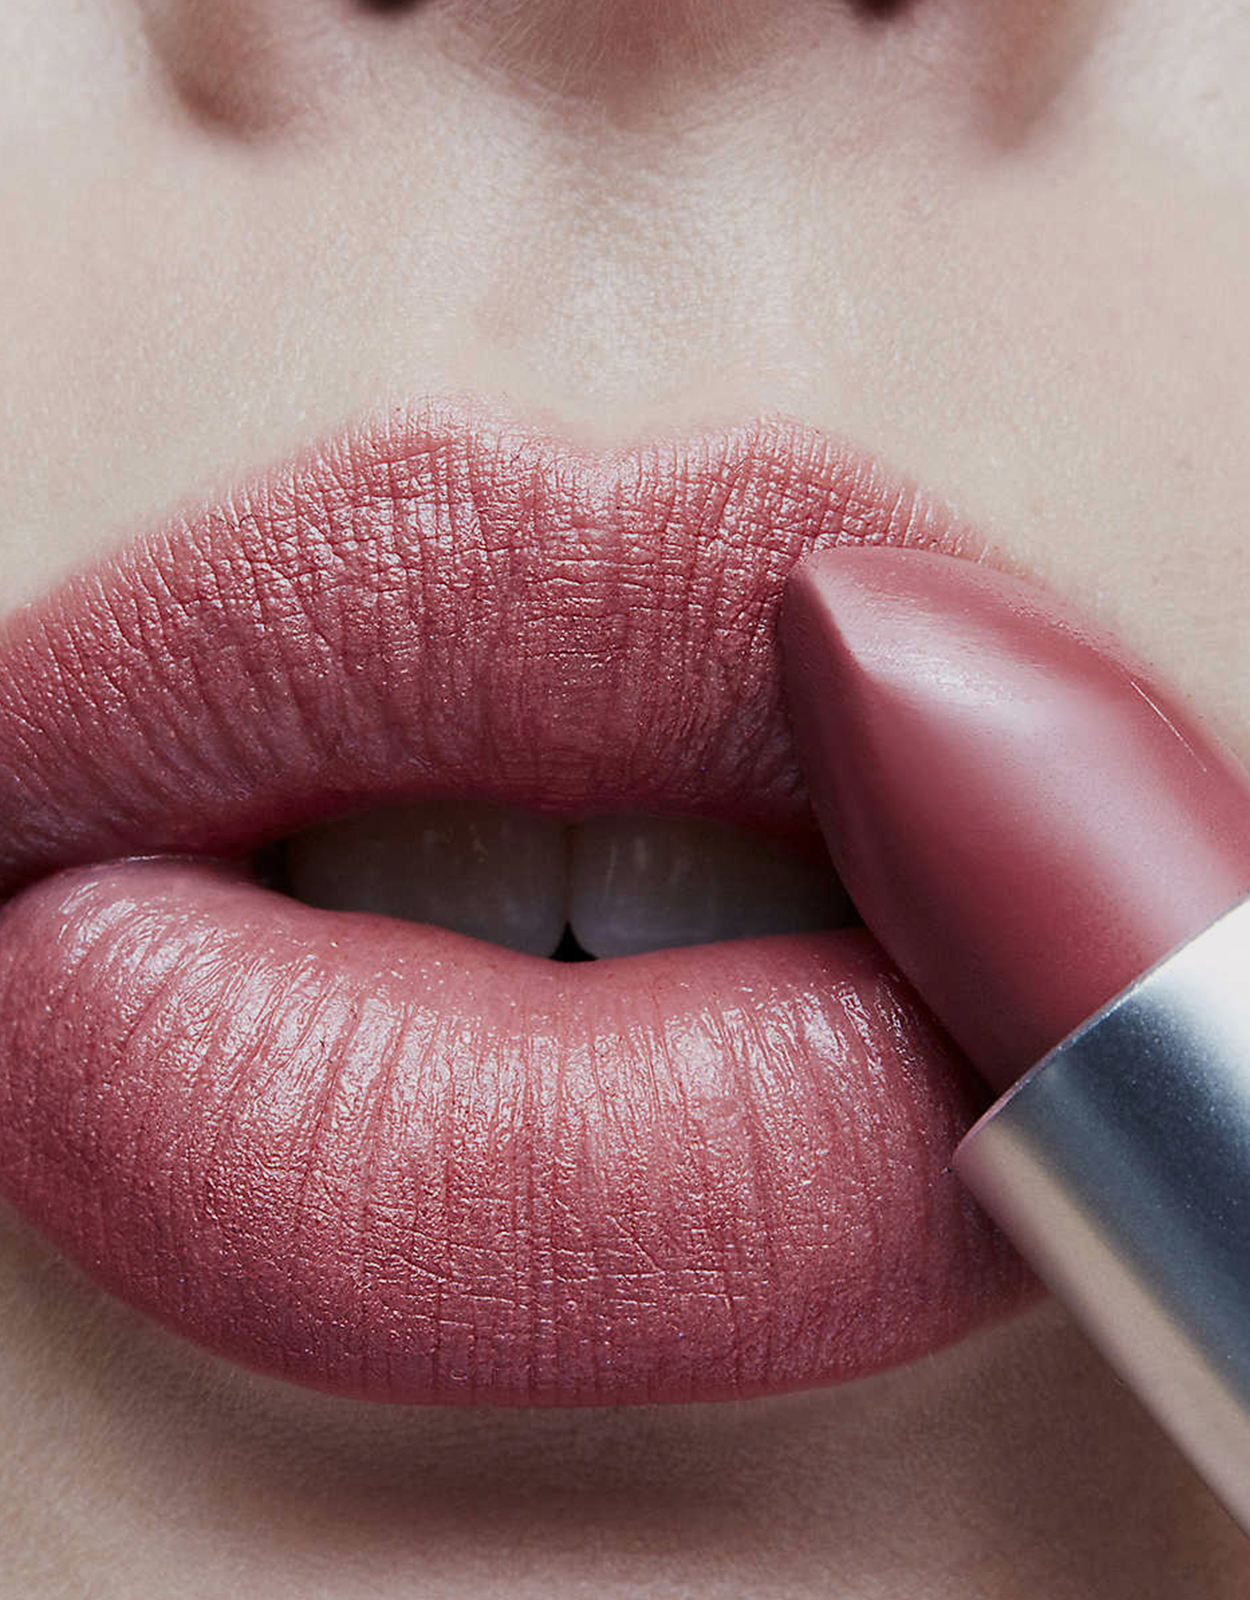 mac lipstick shades